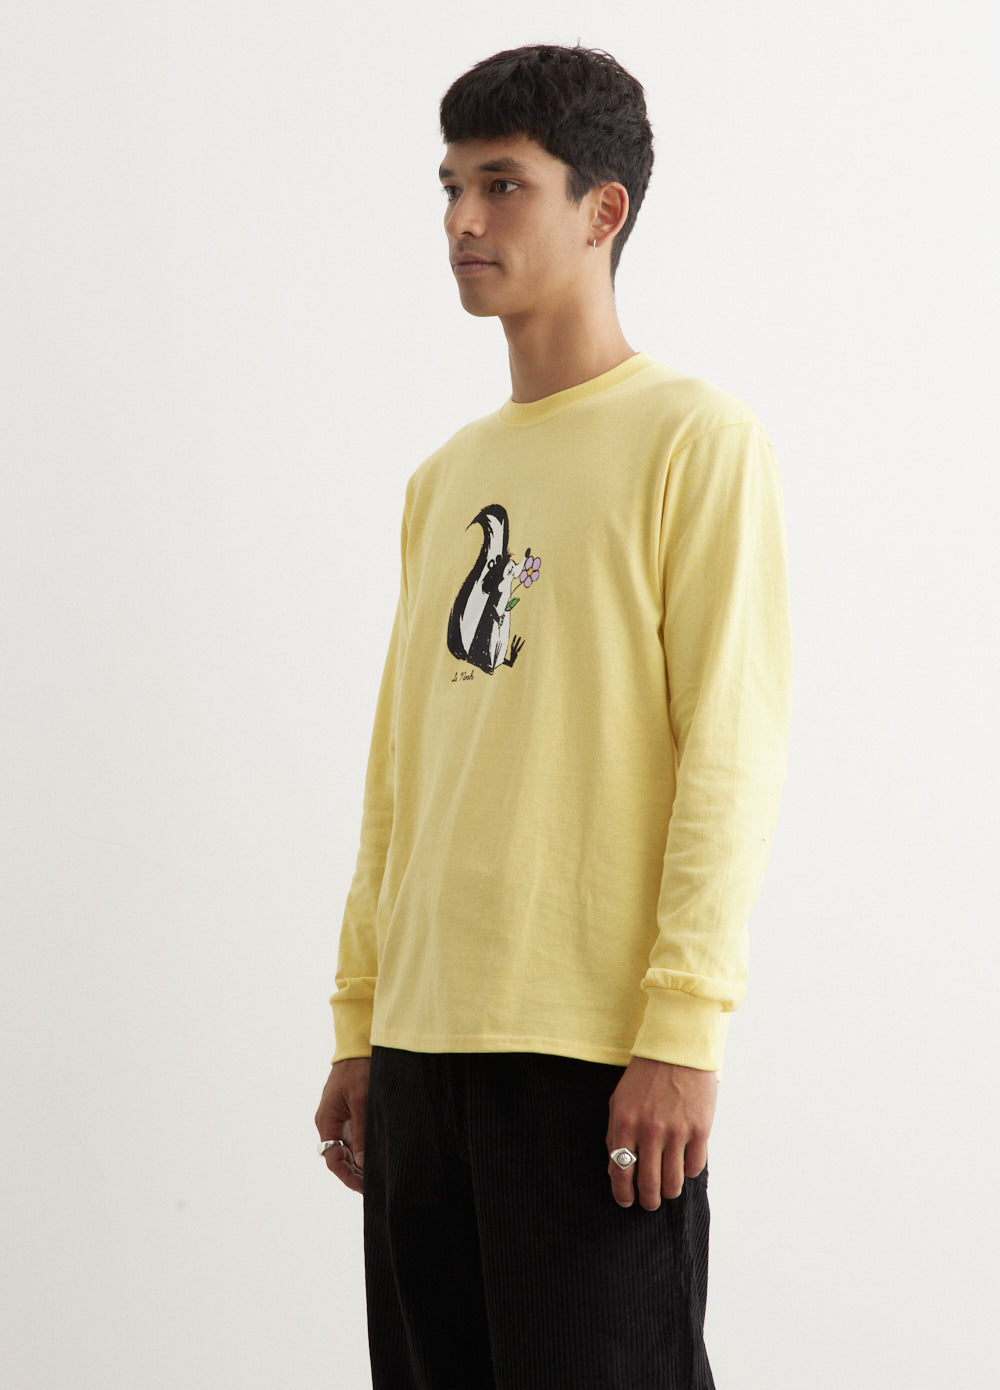 Skunk T-Shirt